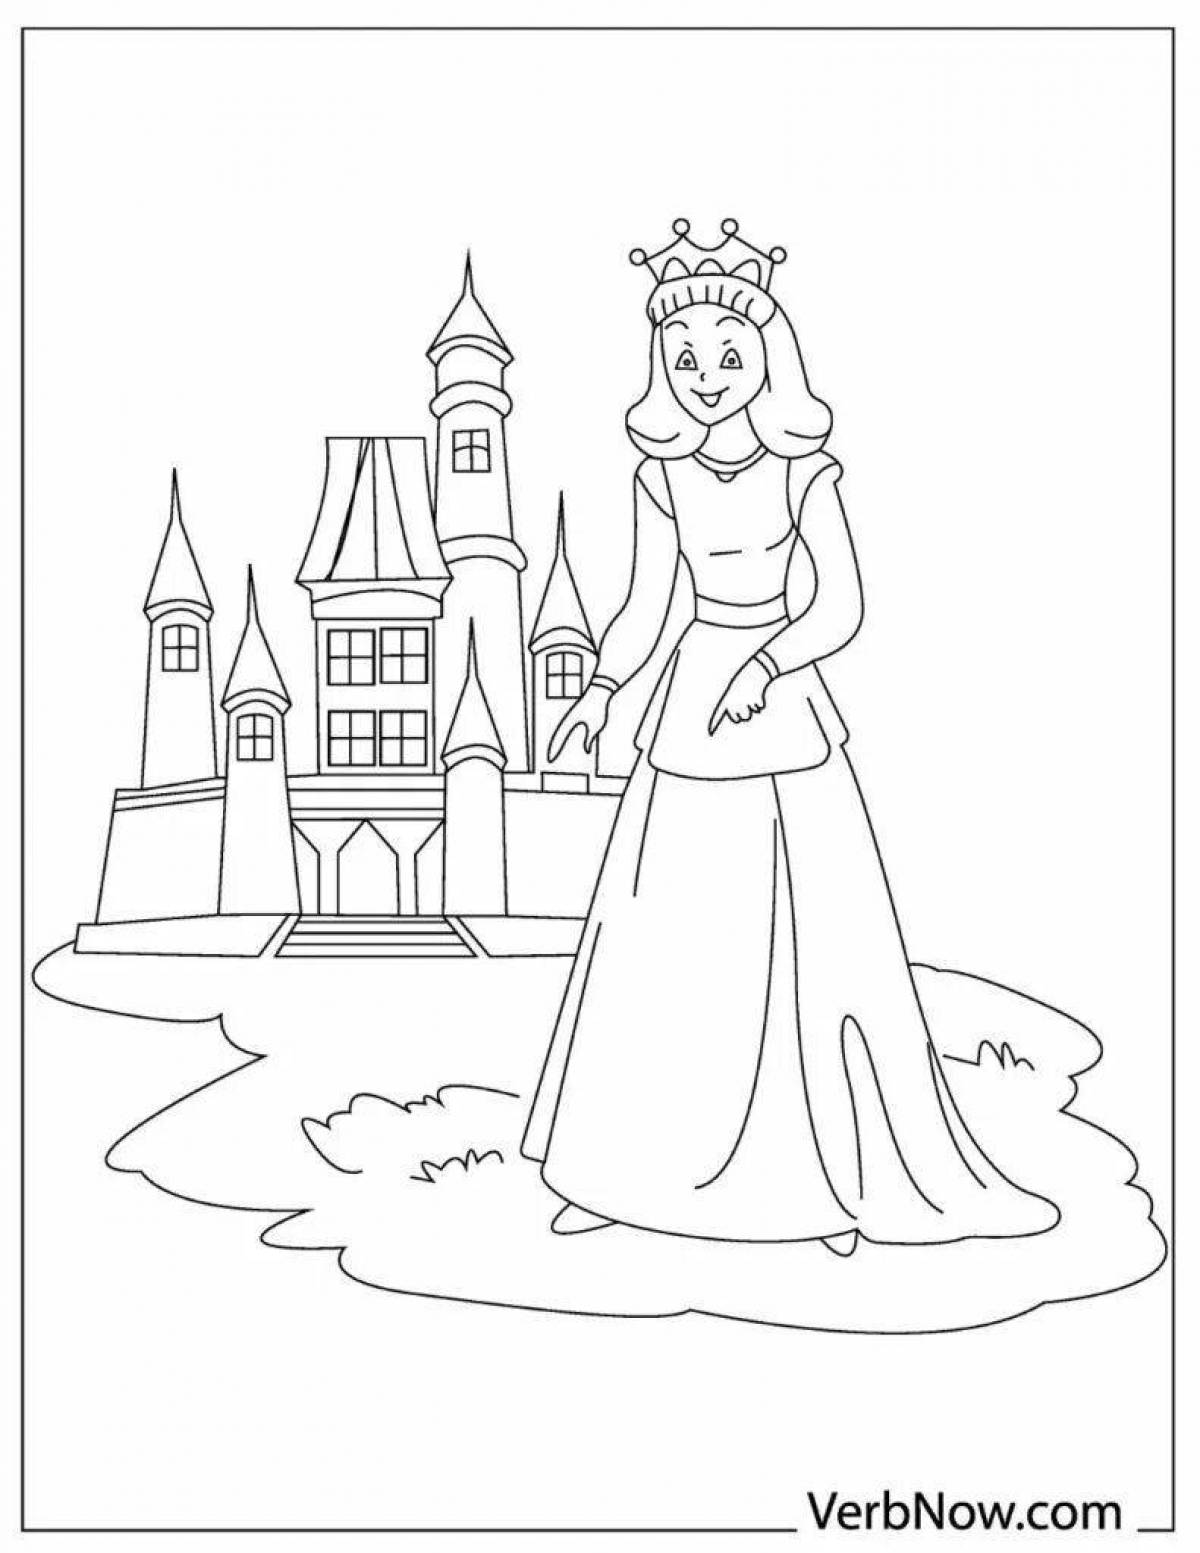 Lavish princess palace coloring book